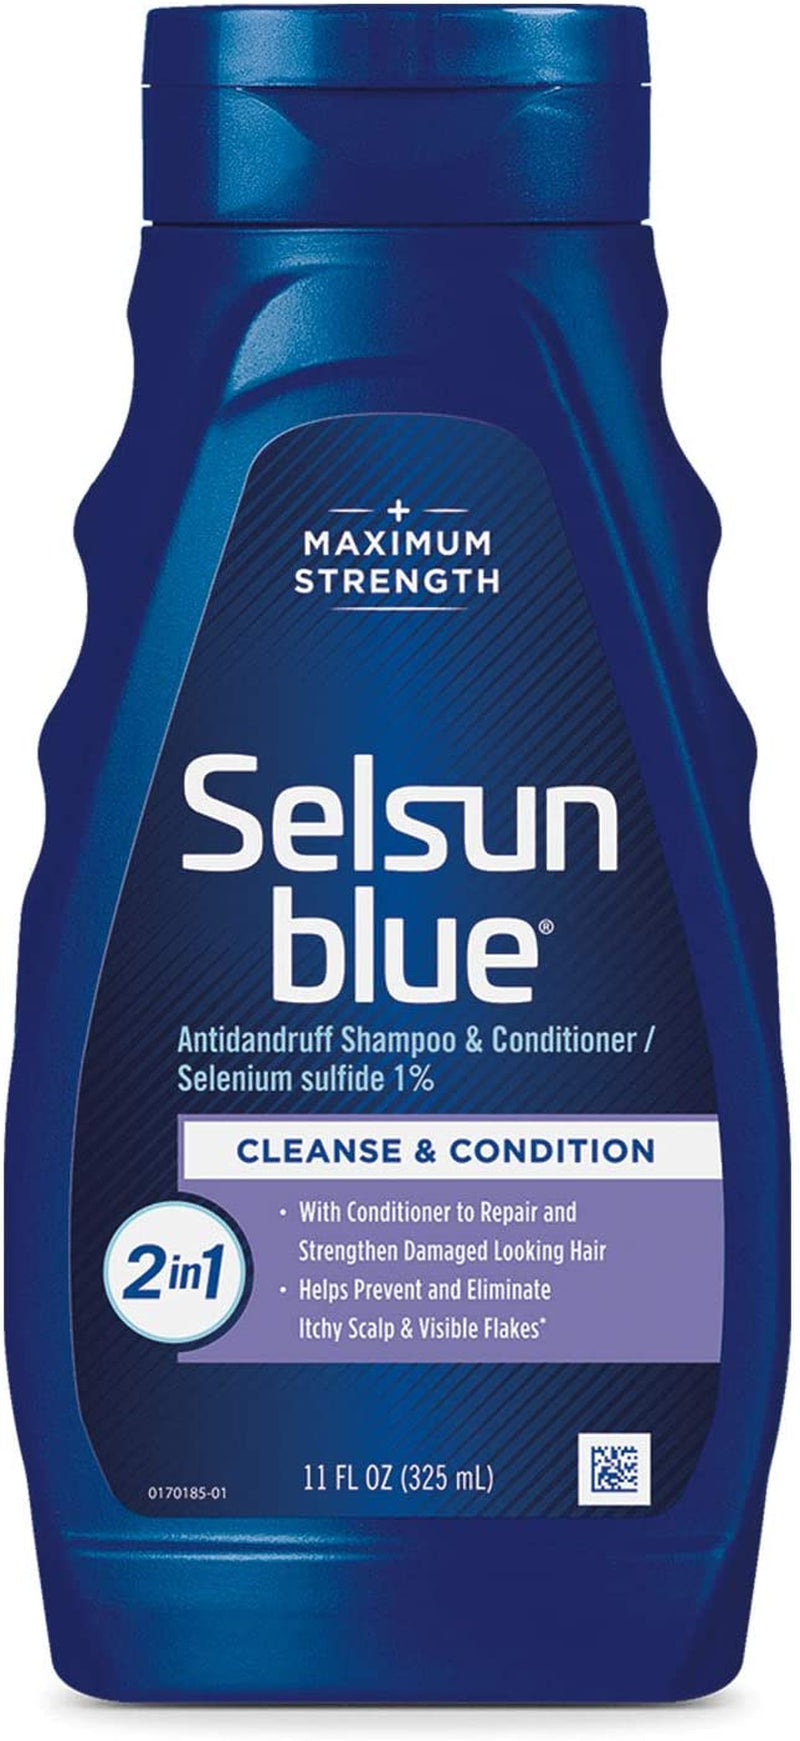 2-In-1 Anti-Dandruff Shampoo & Conditioner, 11 Fl. Oz., Maximum Strength 2-In-1 Treatment, Selenium Sulfide 1%